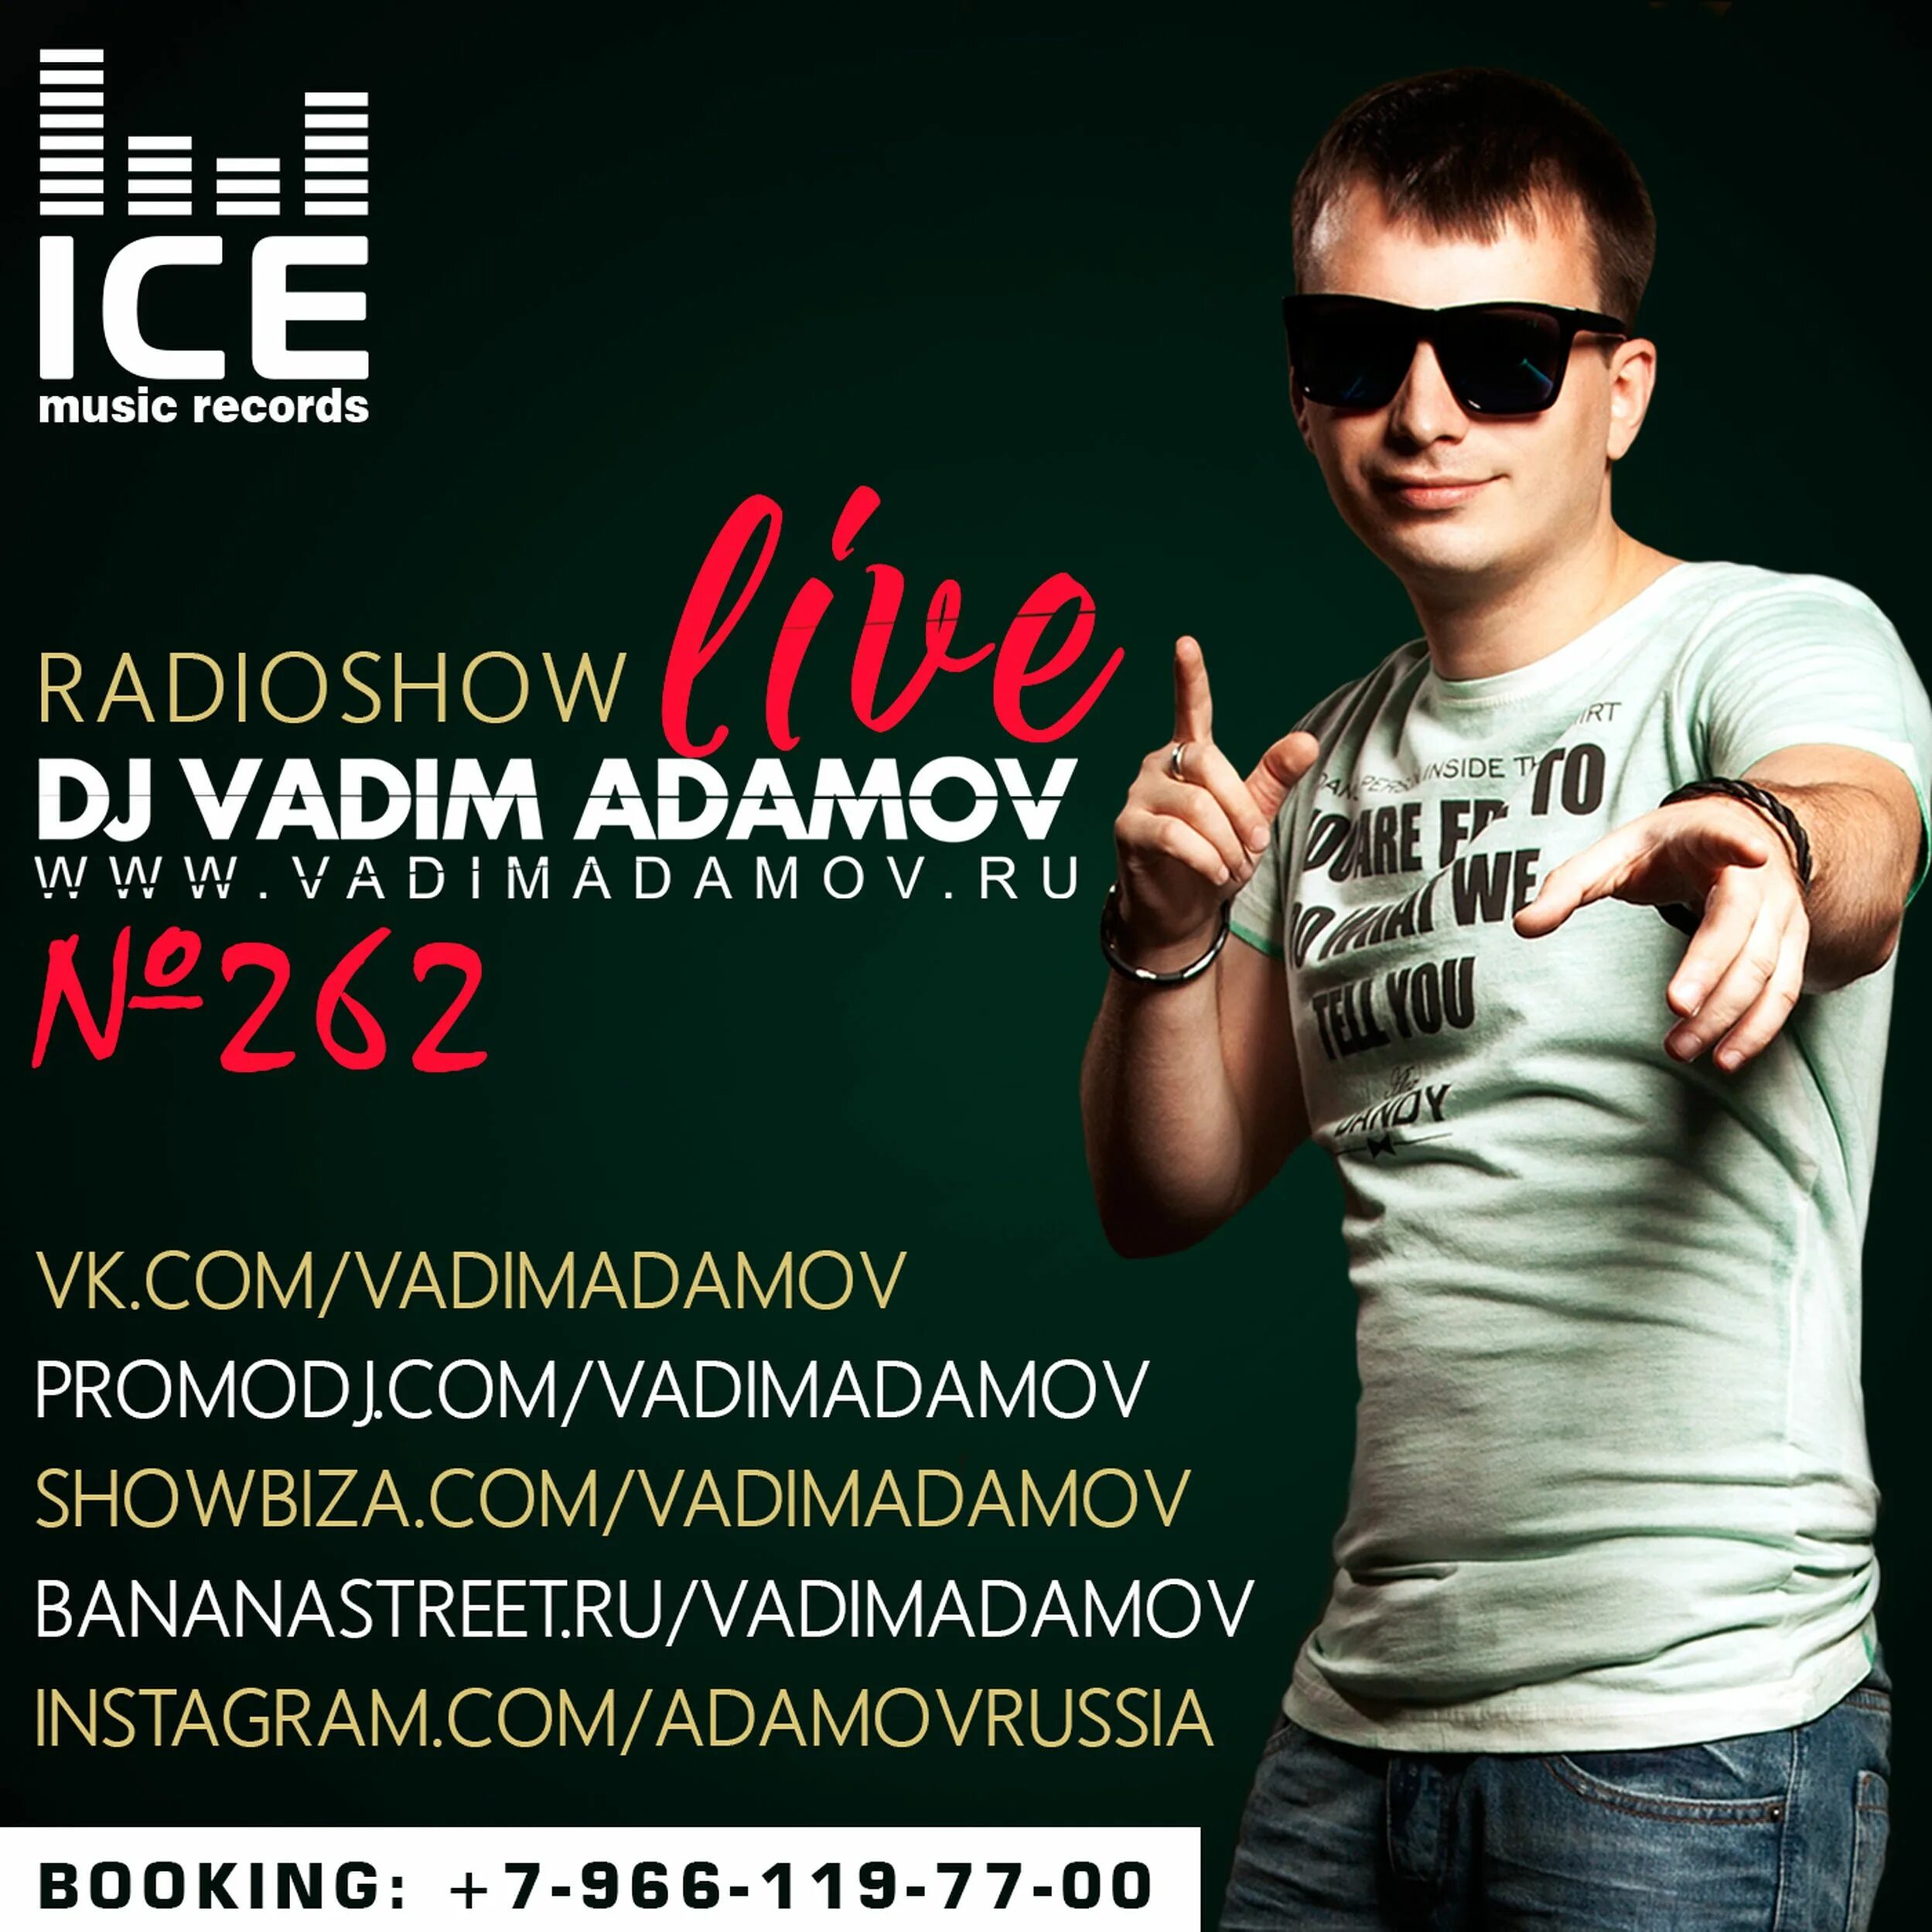 Радио рекорд рэп. DJ Vadim Adamov. Радиошоу.